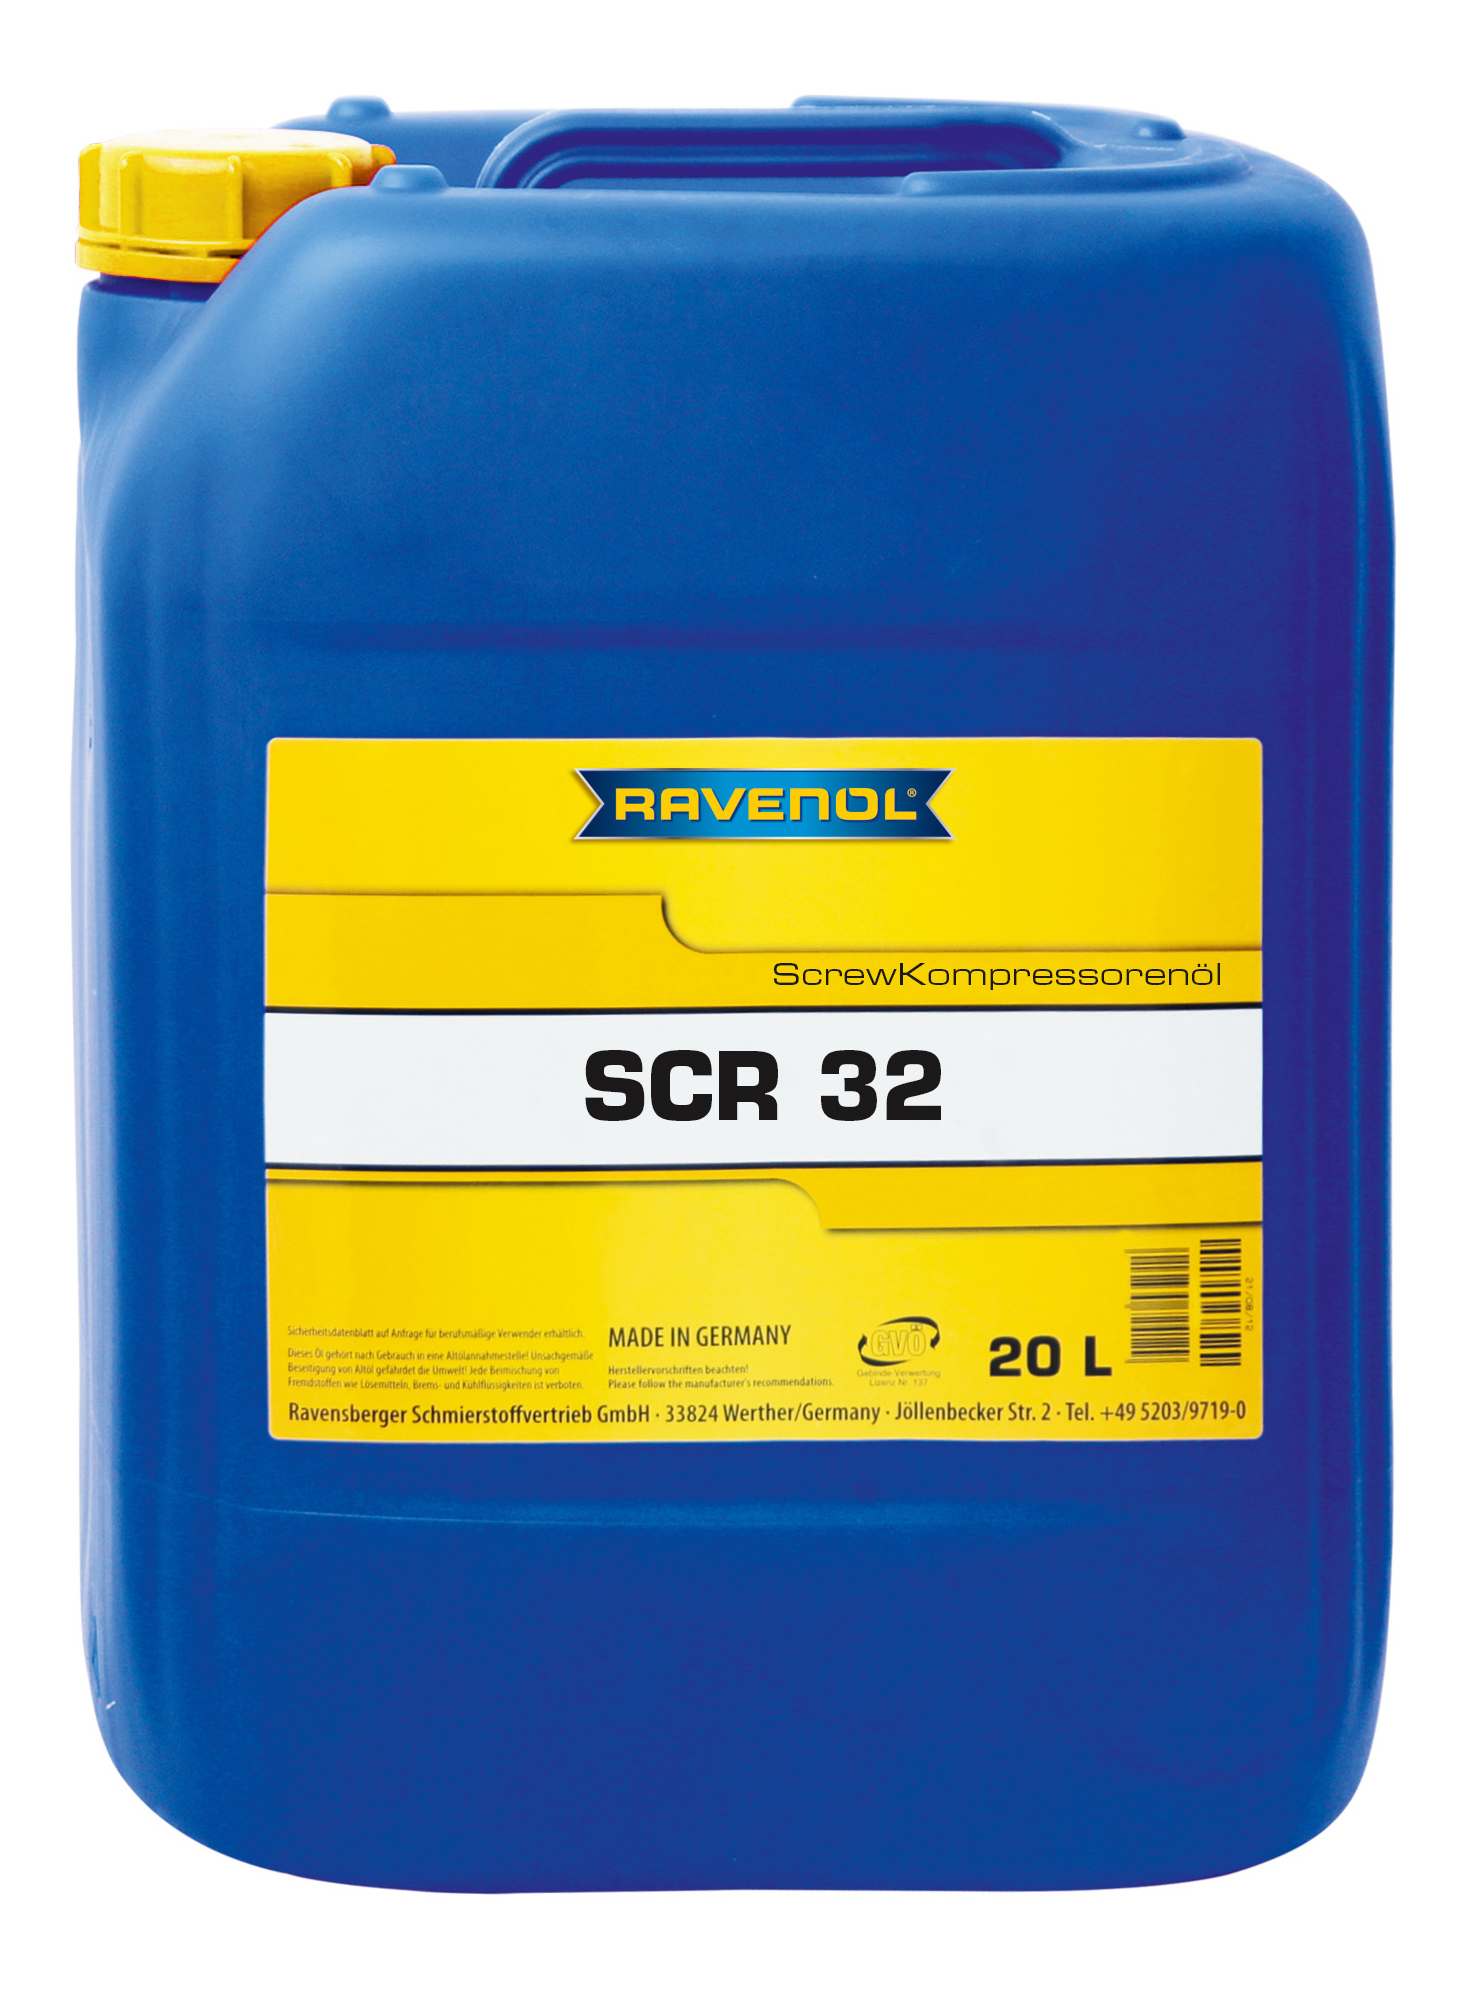 Компрессорное масло RAVENOL Kompressorenoel Screew SCR 32 20л 1330304-020-01-999